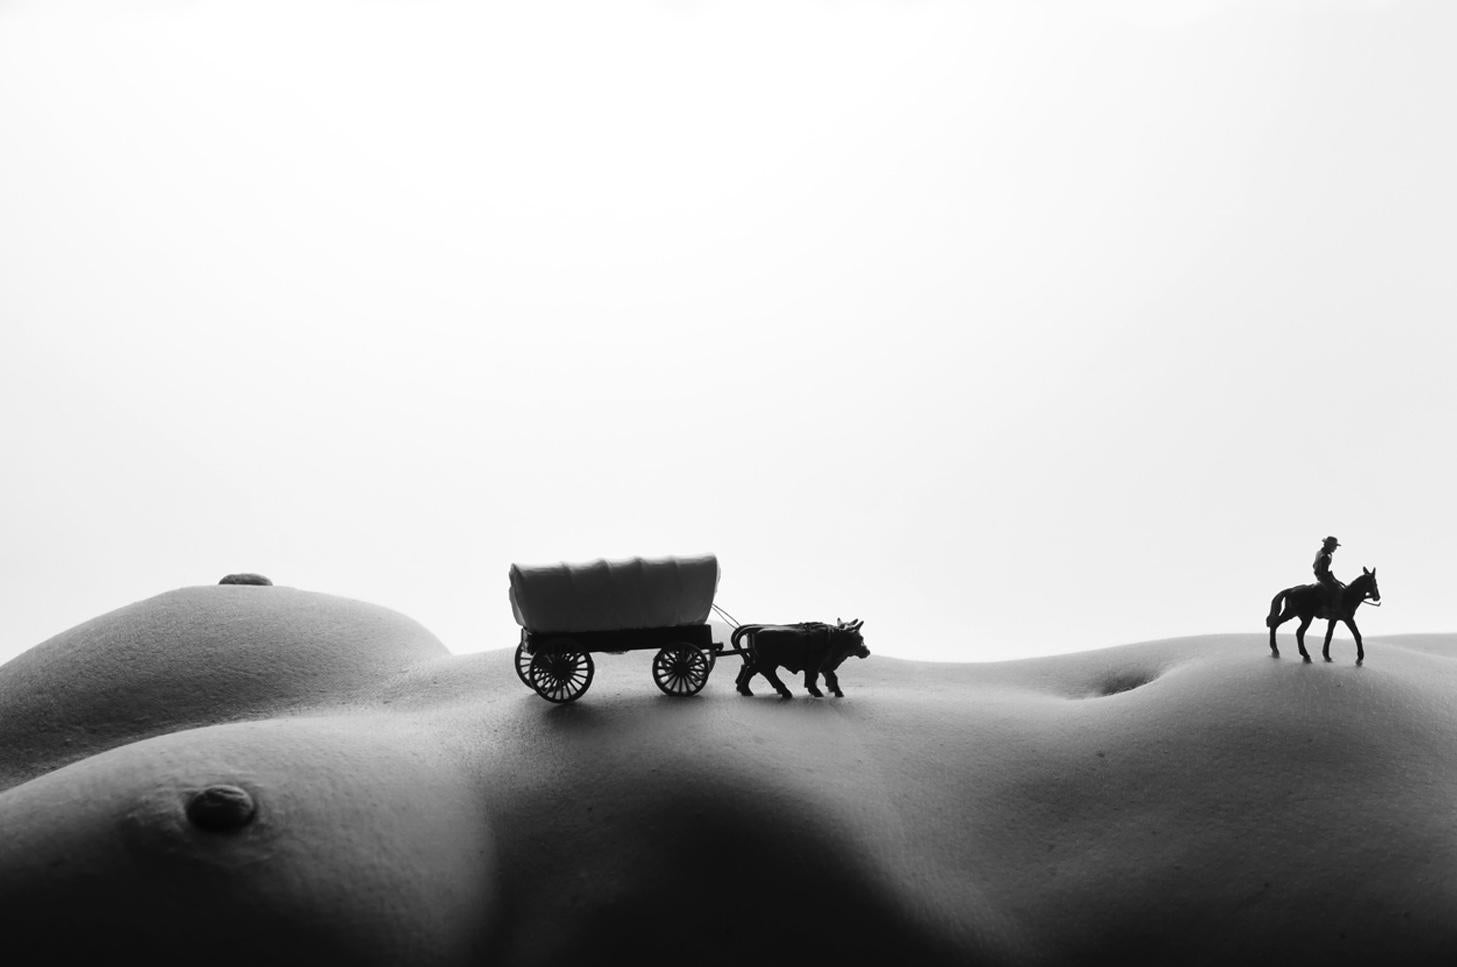 Conastoga wagon - black and white photography - Contemporary Photograph by Allan I. Teger